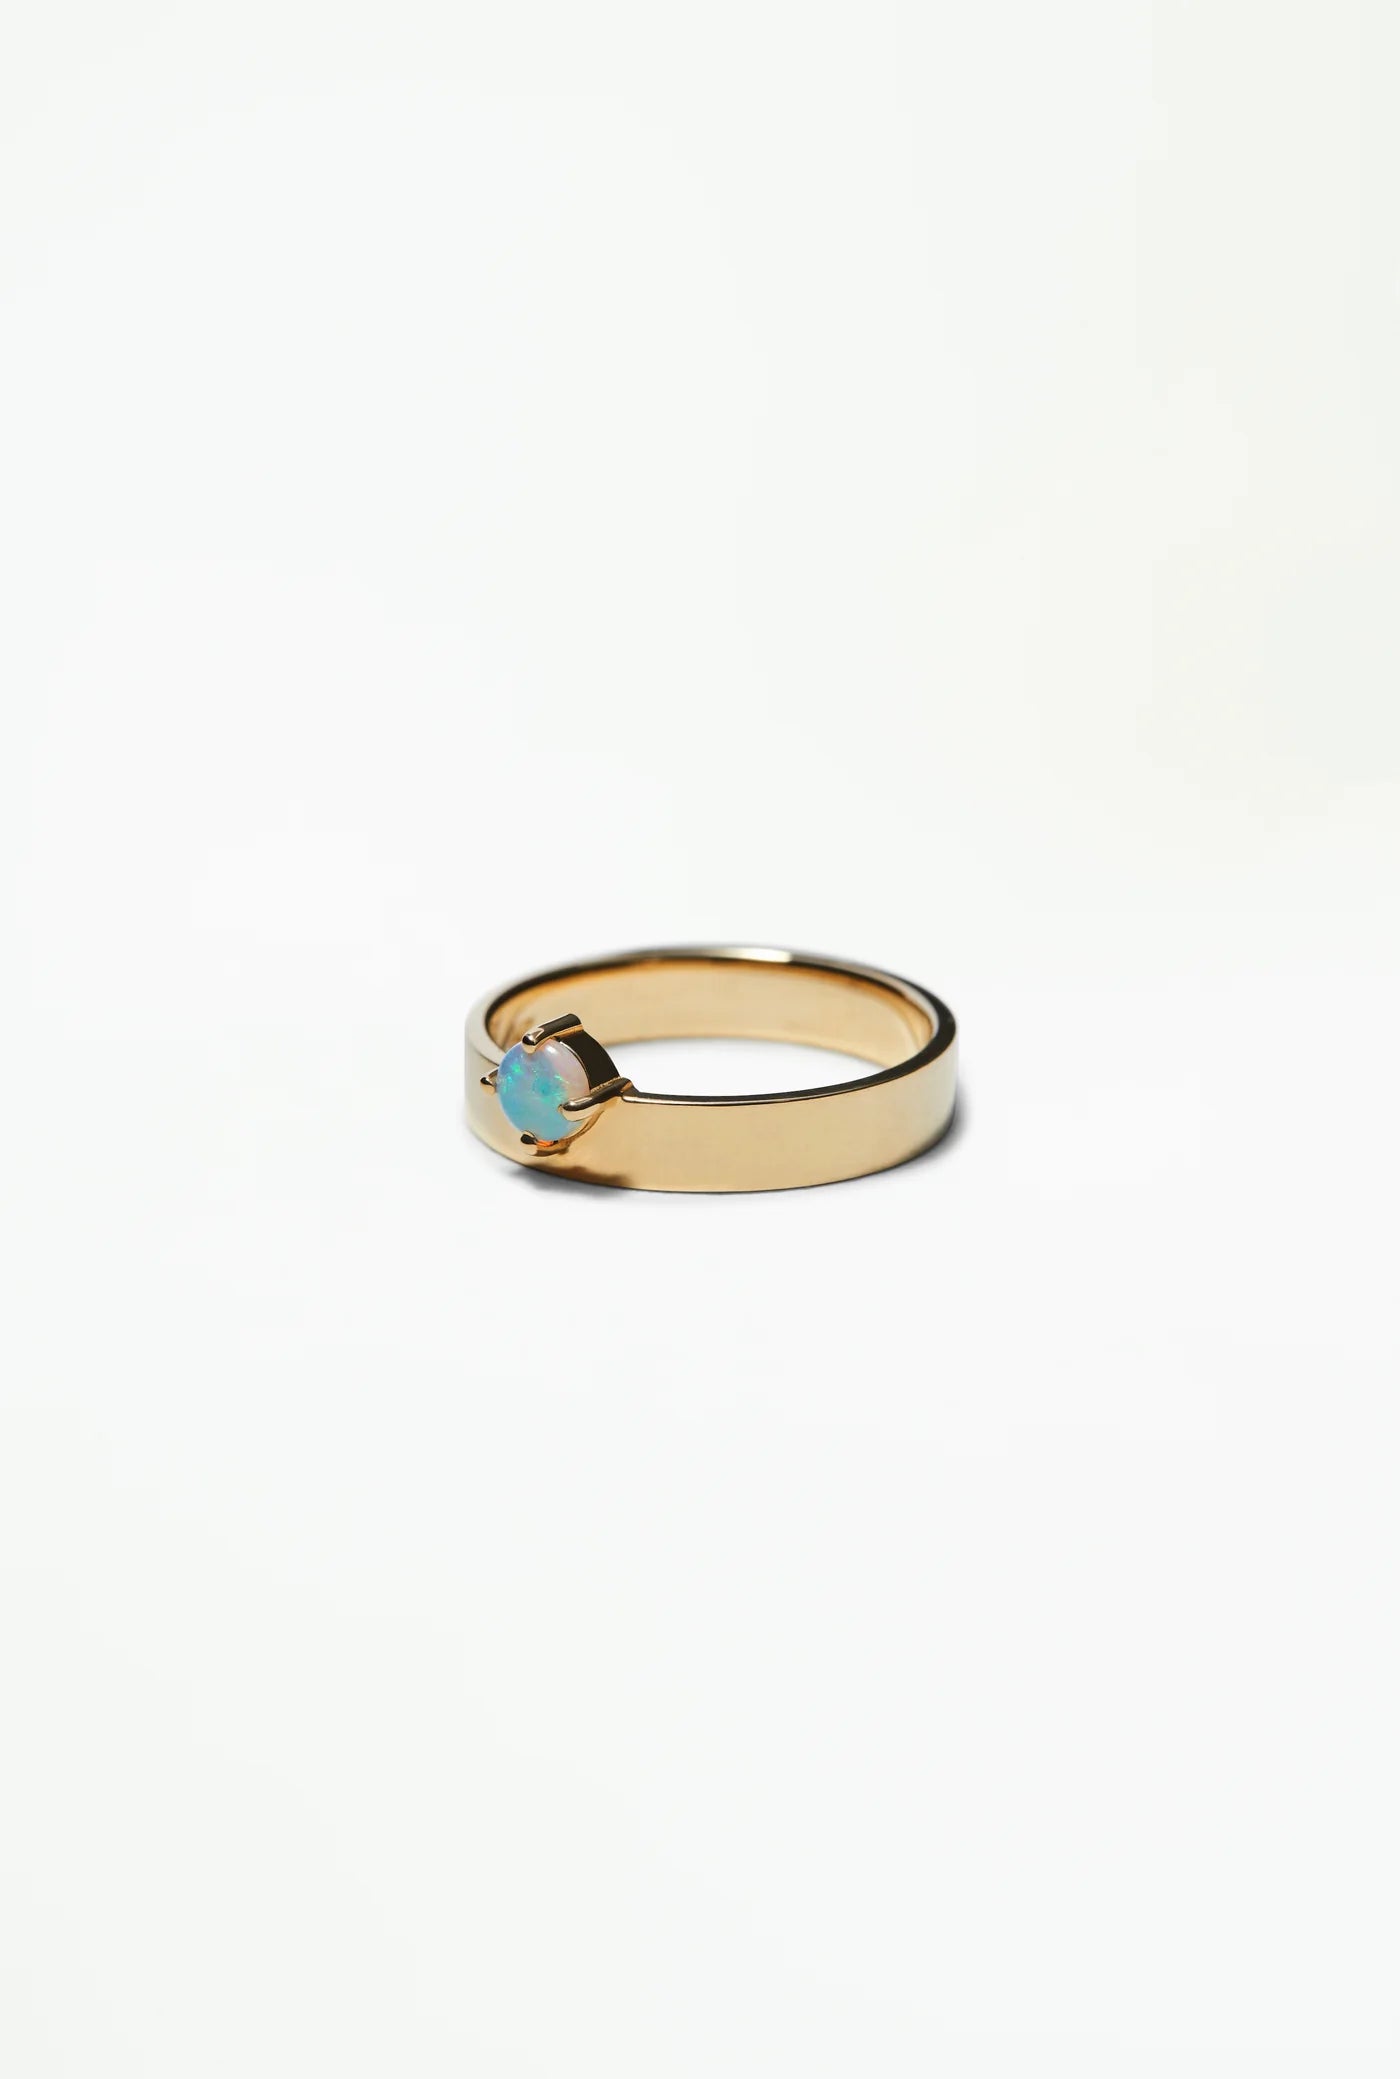 wwake / small opal monolith ring